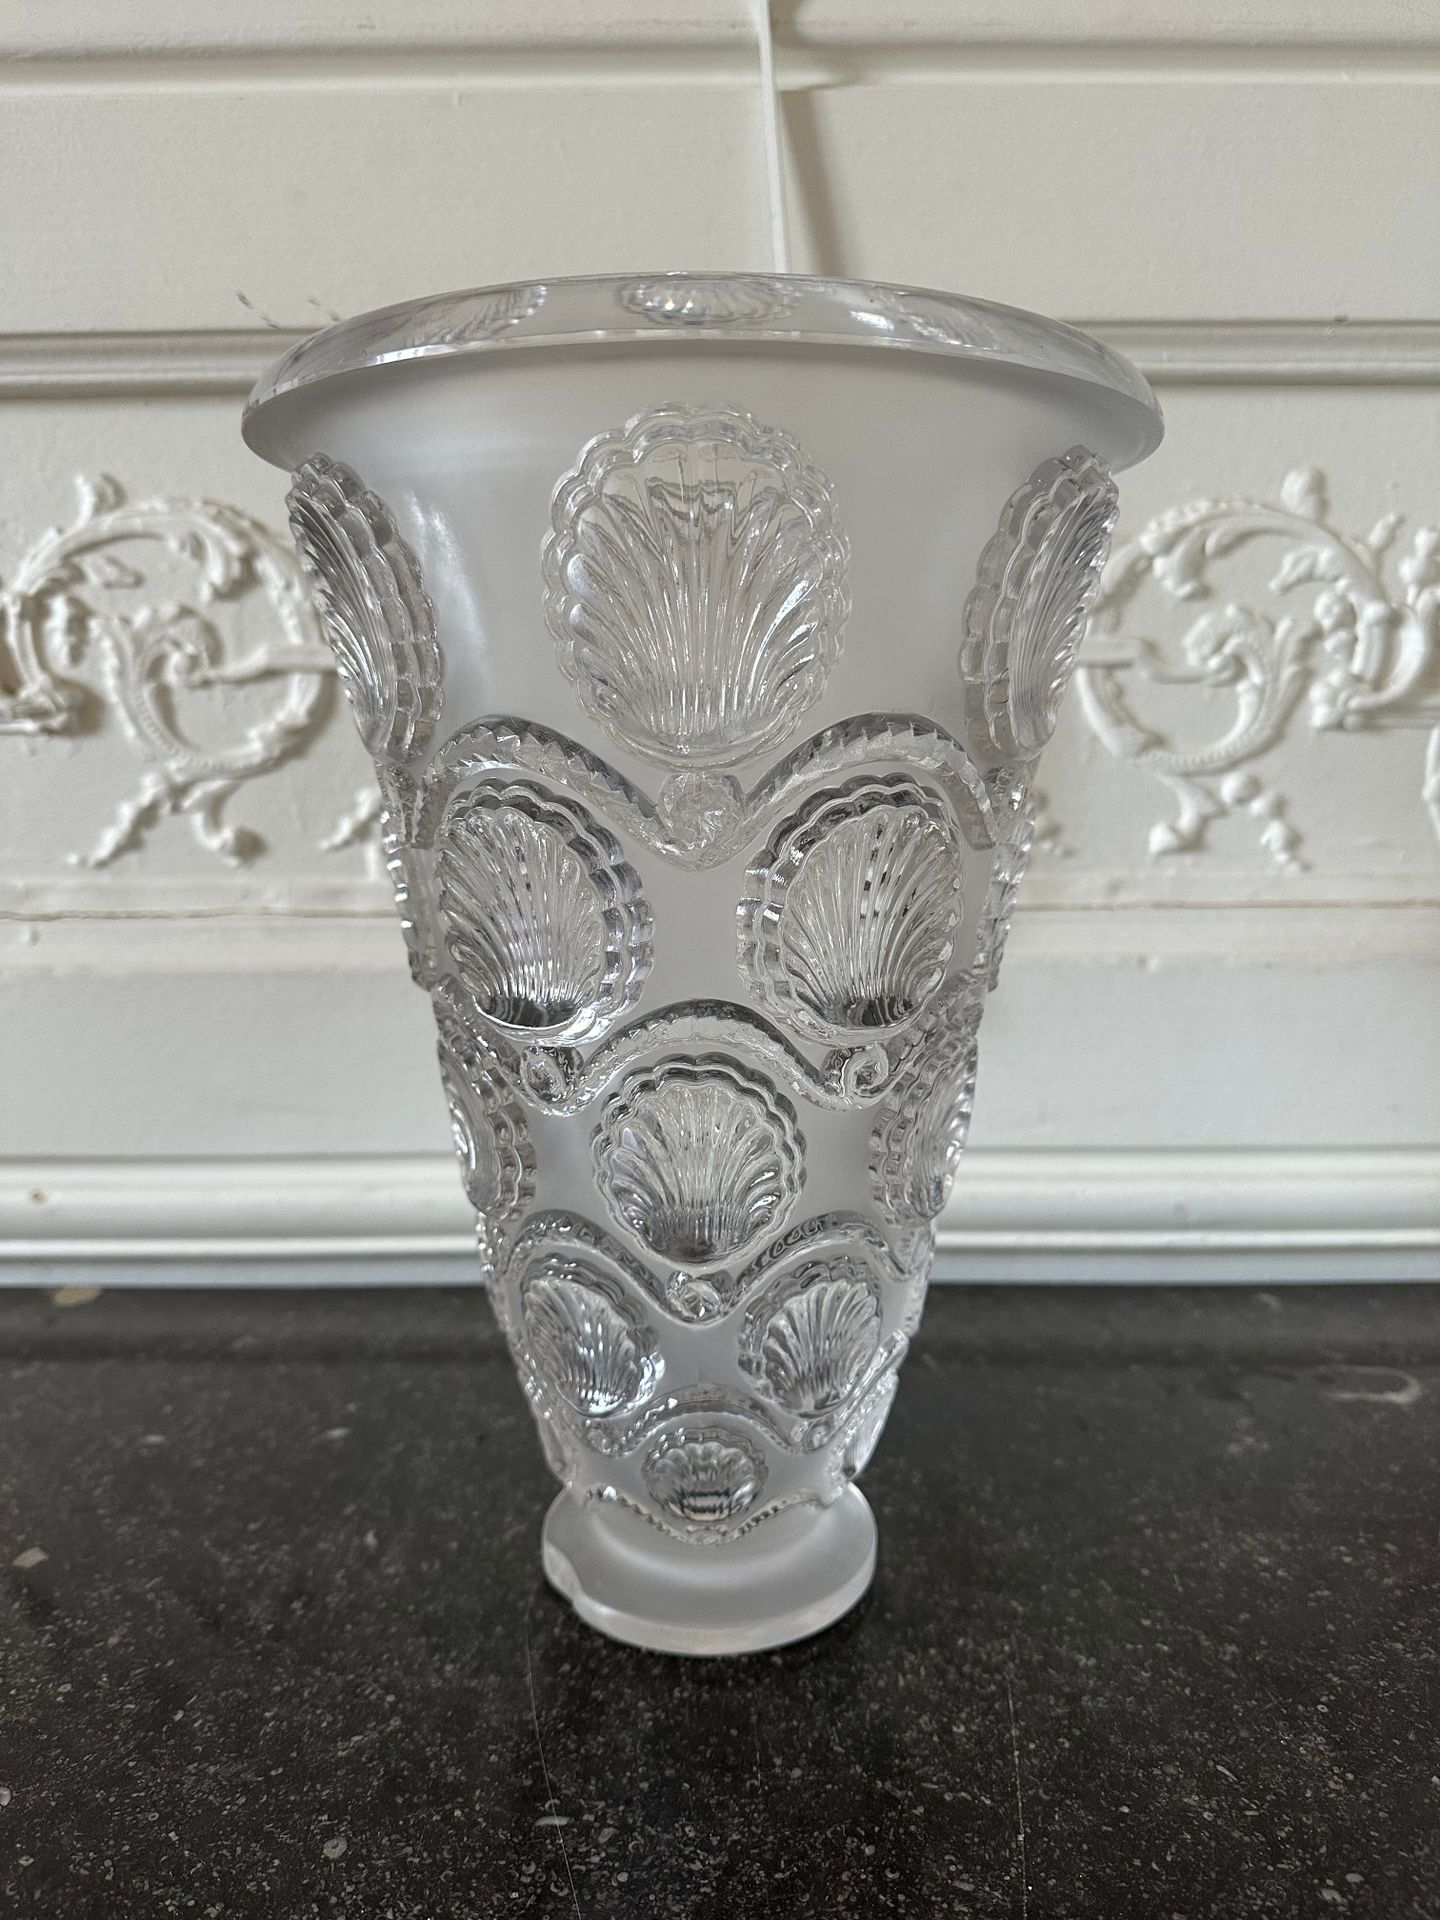 Null 法国LALIQUE公司
贝壳设计的水晶花瓶。
高：30厘米
(脚跟处有缺口)